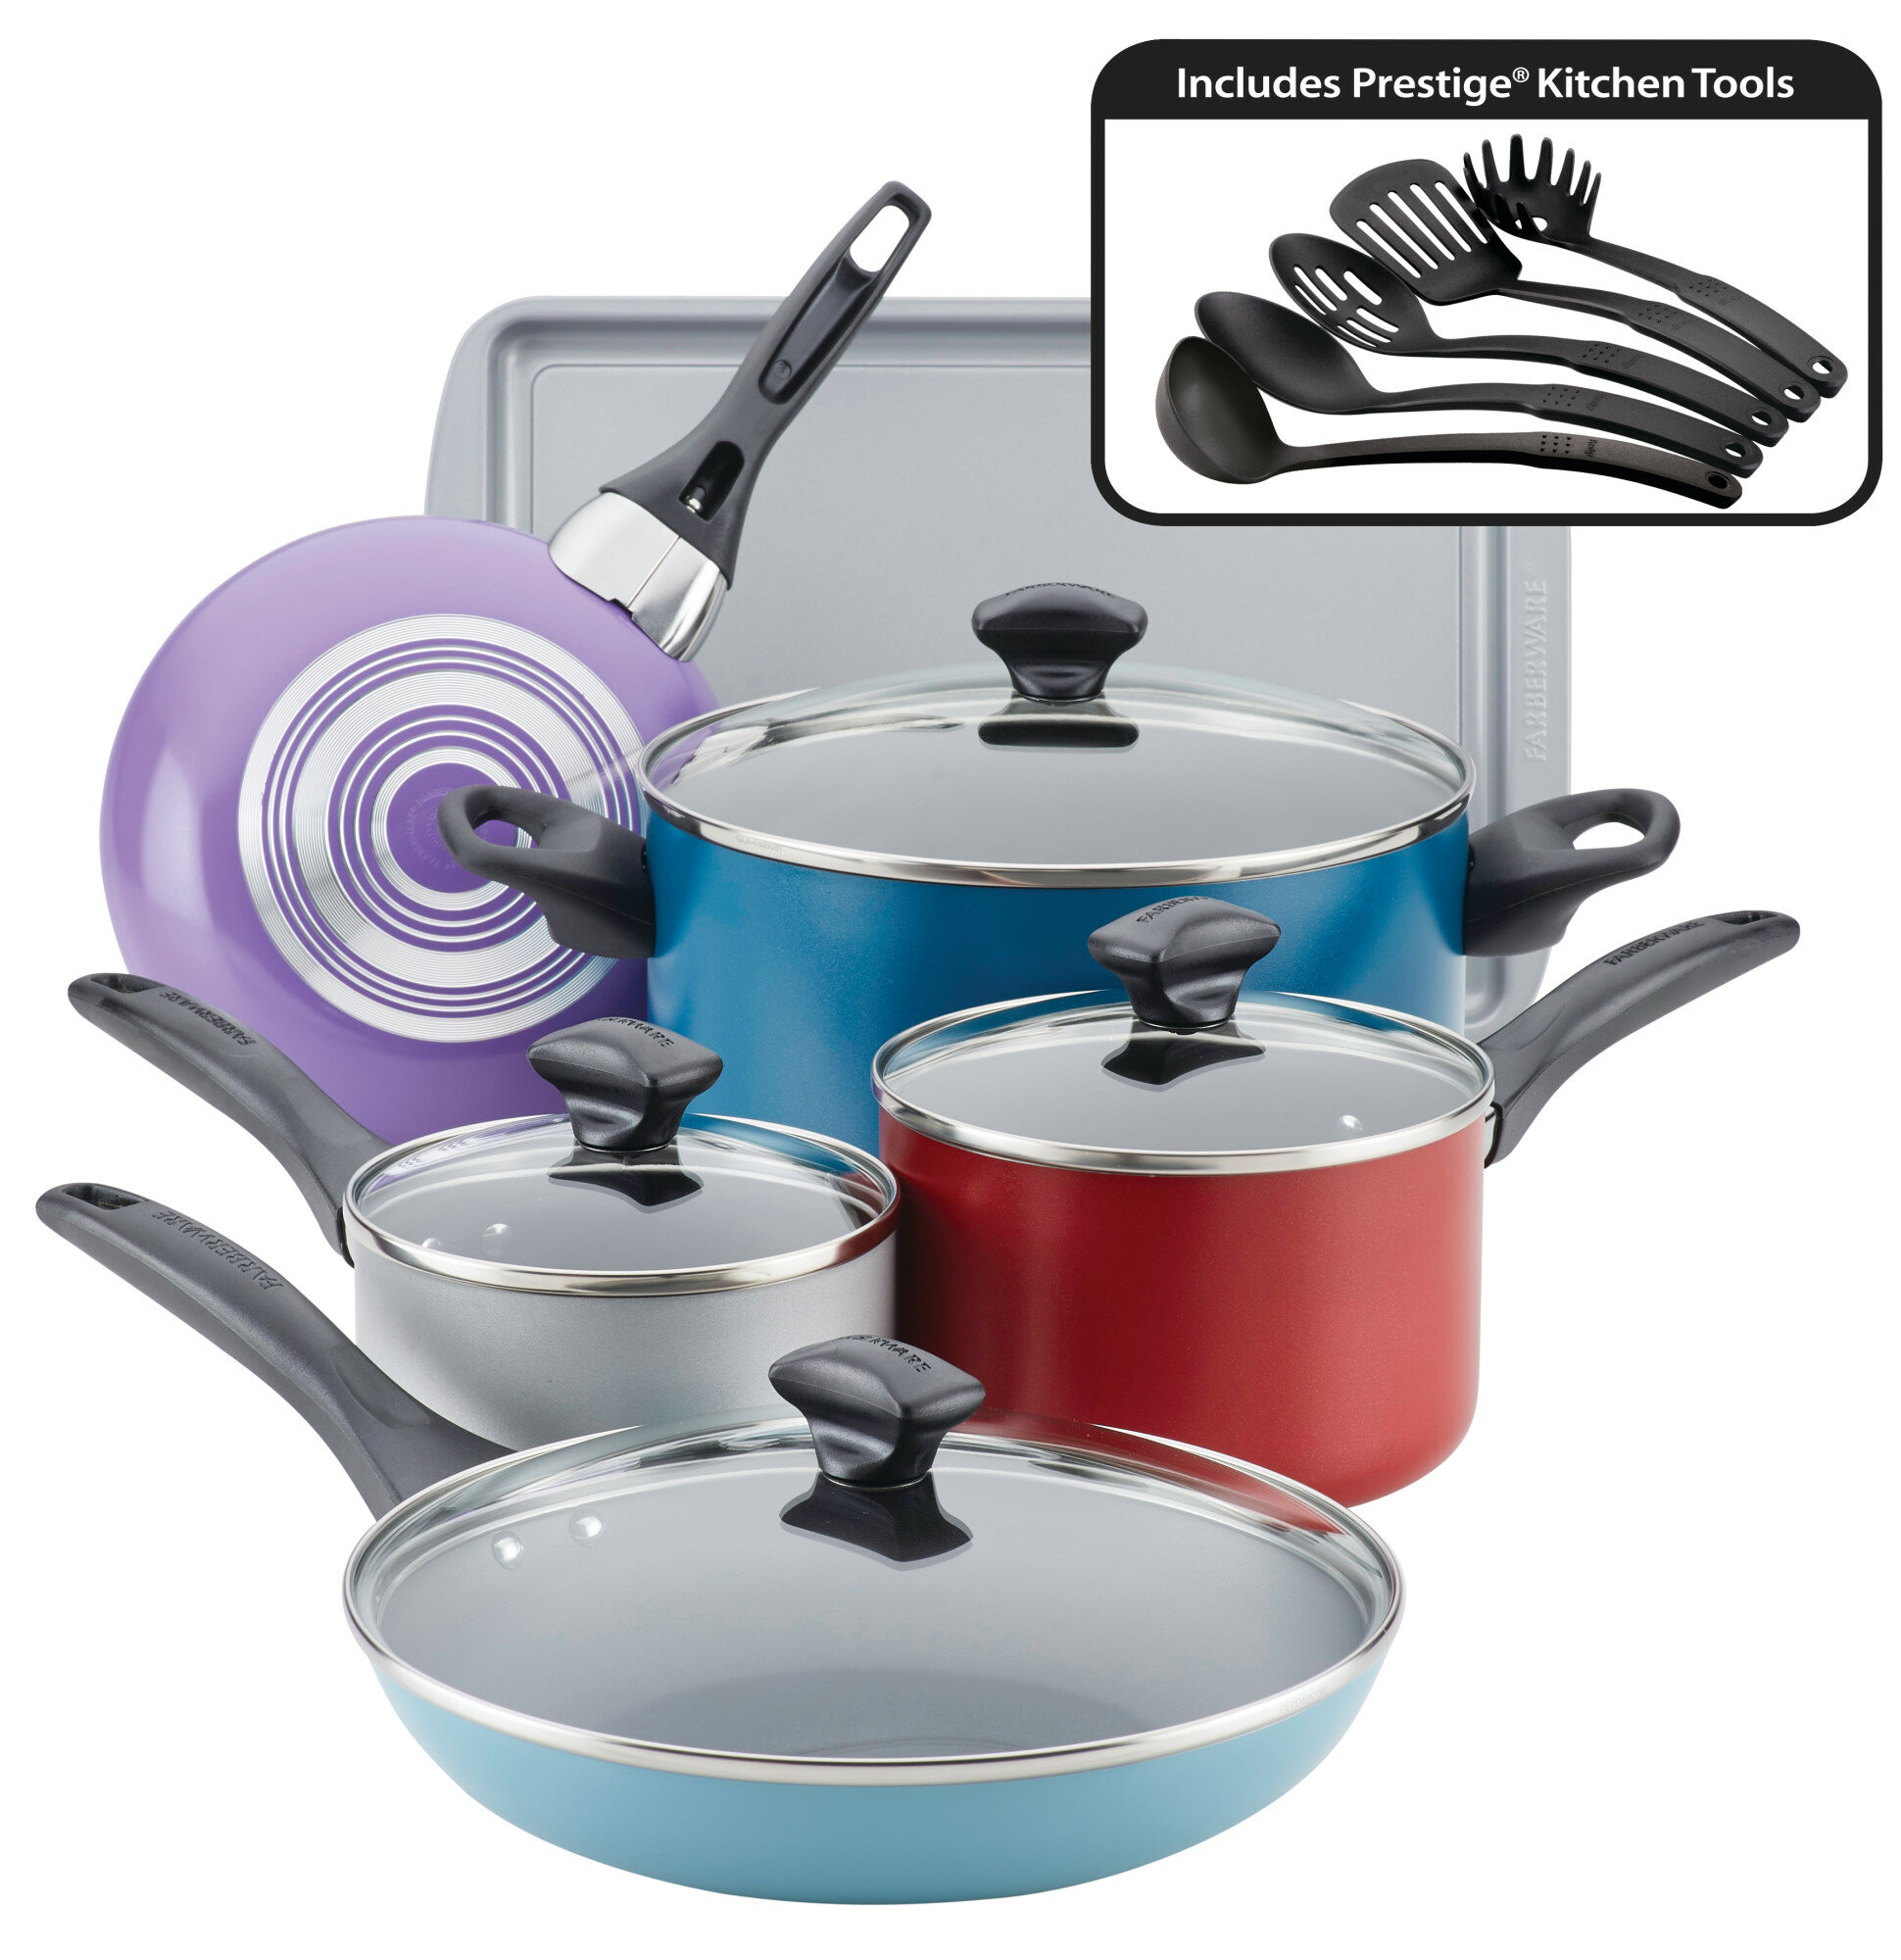 Farberware Dishwasher Safe Nonstick 15-Piece Cookware Set, Black